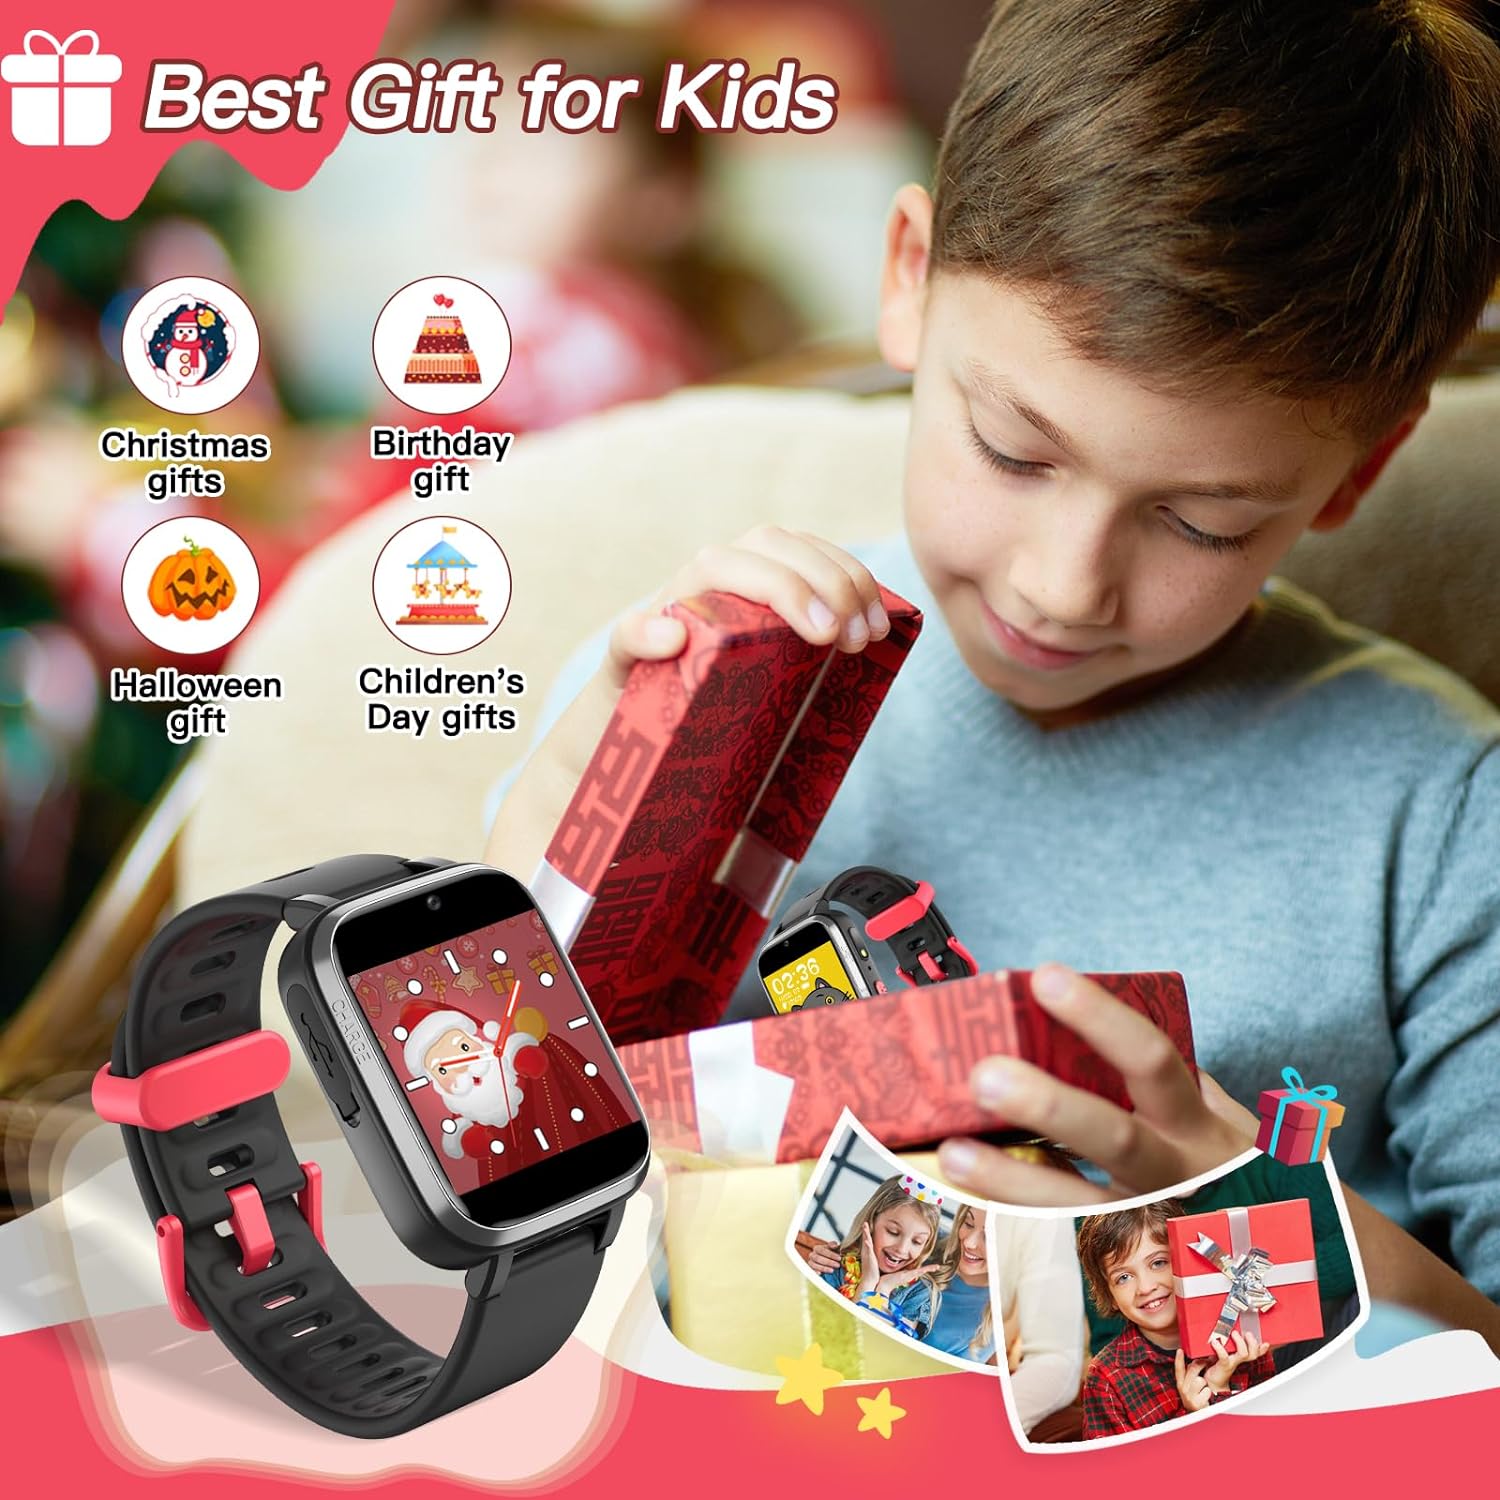 Butele Kids Games Smartwatch MP3 Player Music Watch, Kids Smart Watch with 16 Games, Flashlight,Alarm Clock, Camera, Kids Watch Birthday Gift for Boys Girls 4-16（Black）